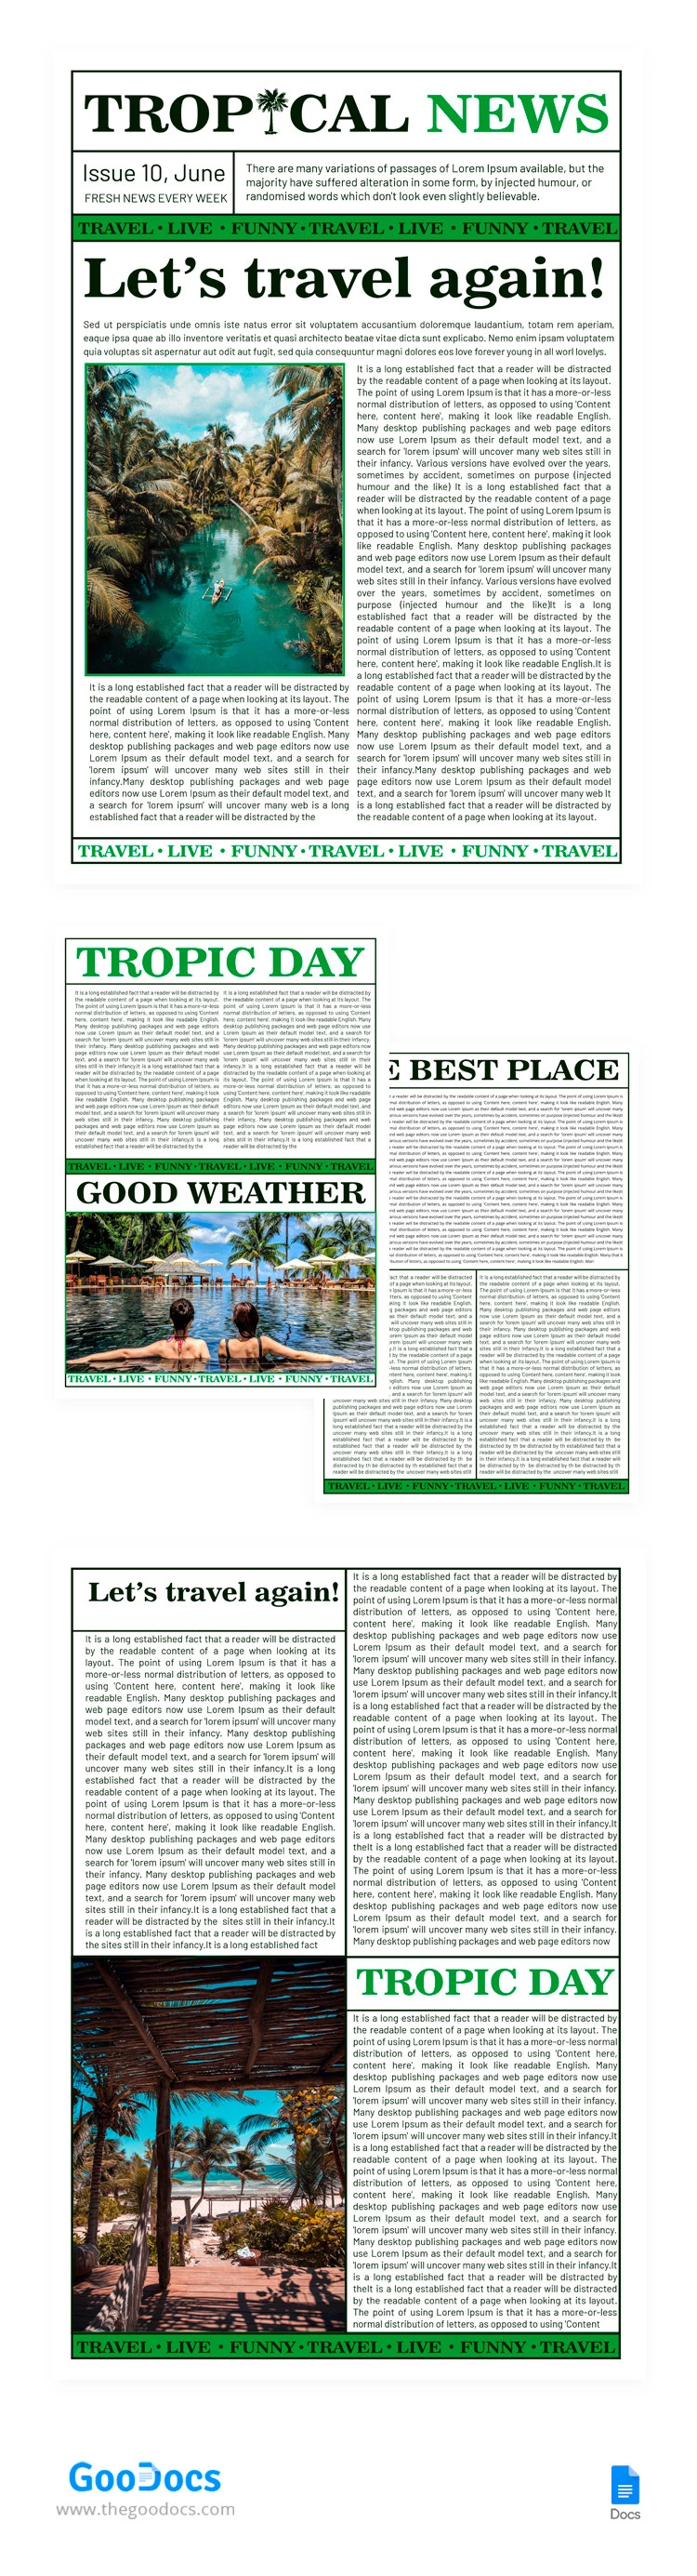 Jornal Tropical - free Google Docs Template - 10065441